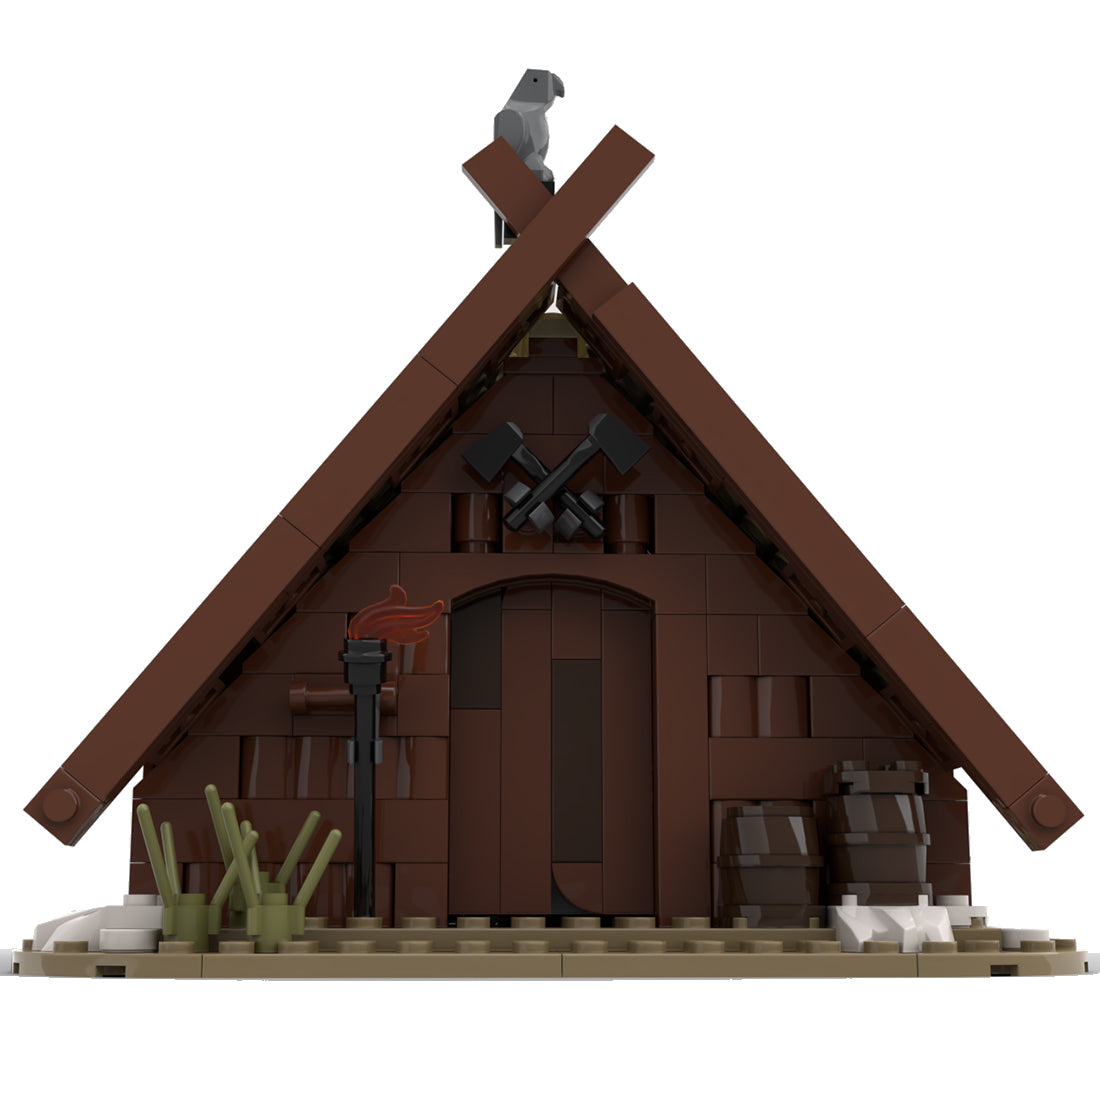 MOC-93063 The Viking's House Medieval Building Blocks